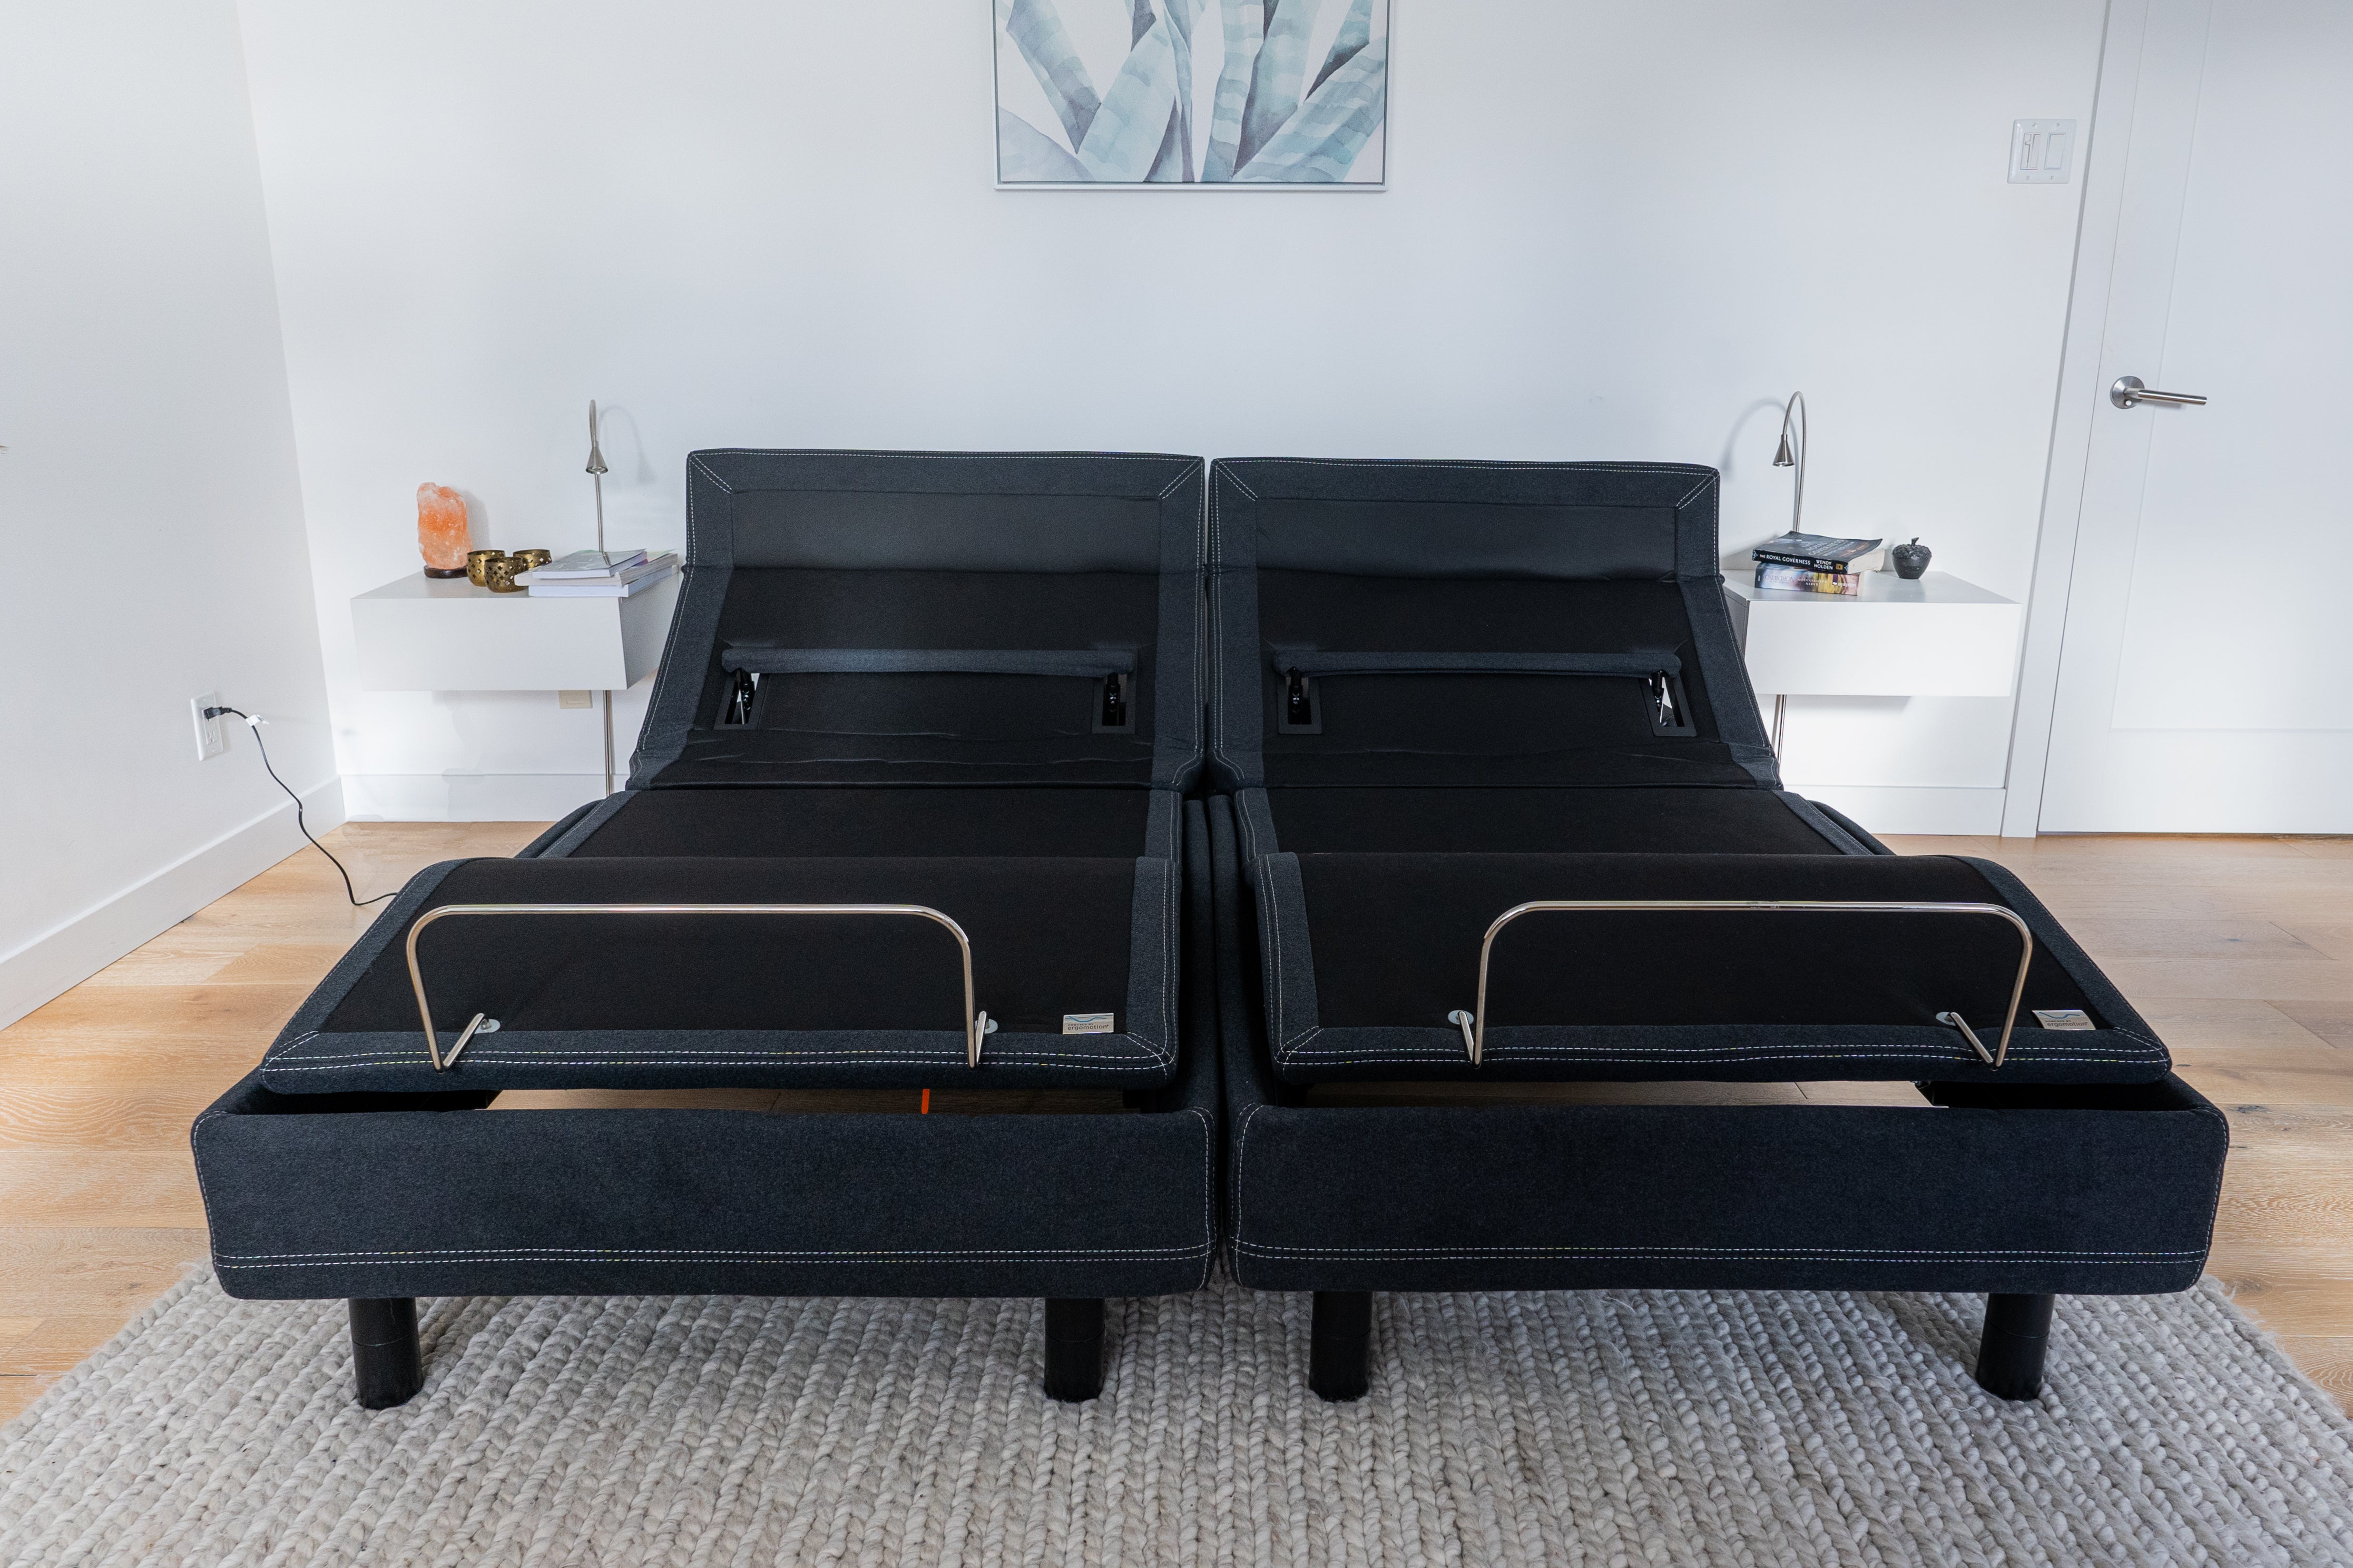 TempurAlign Medium Adjustable Bed Promotion